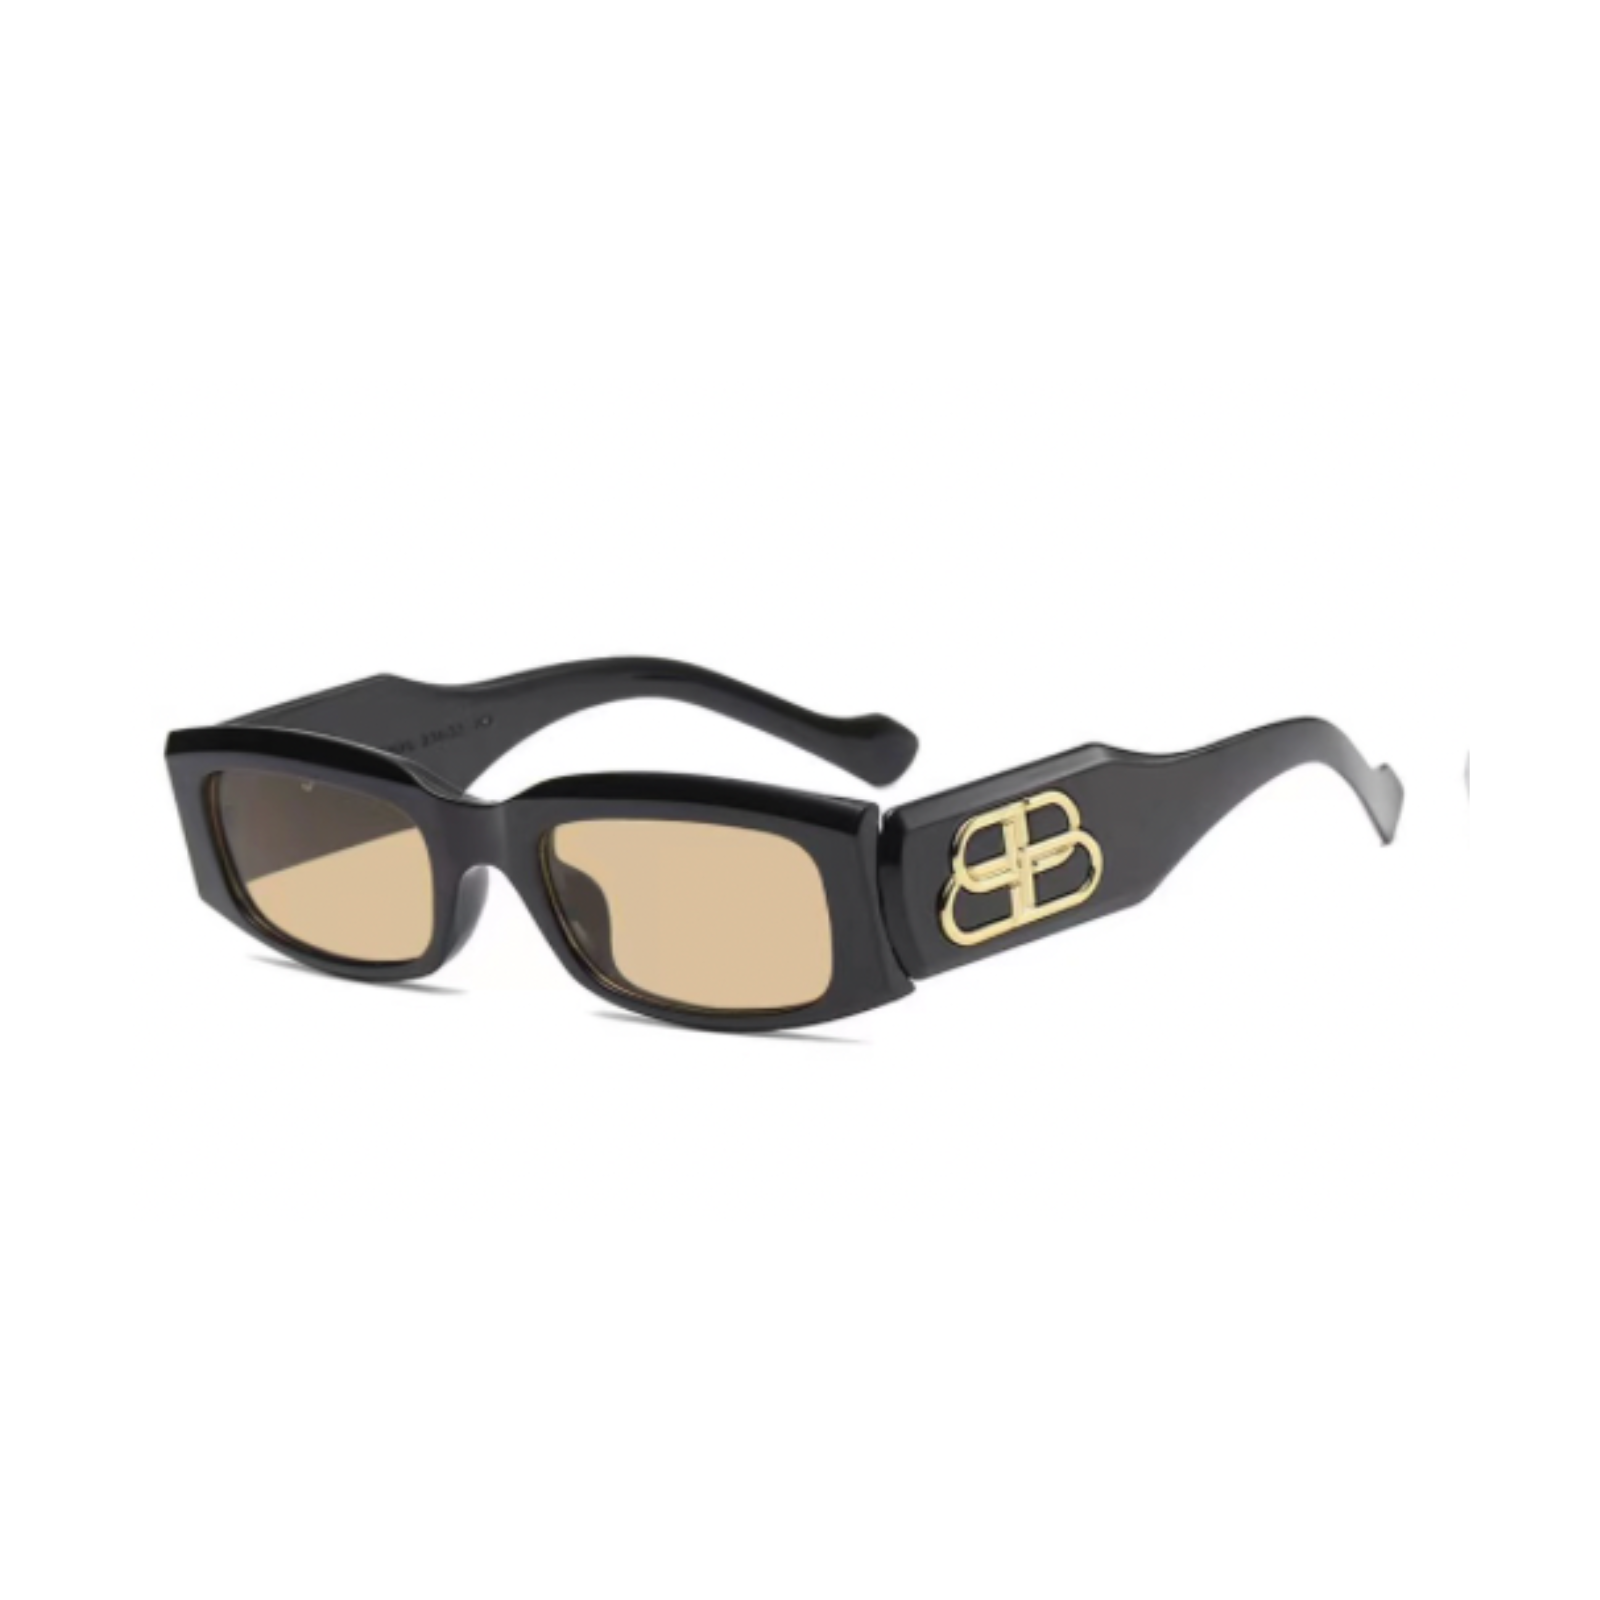 Becca Sunglasses + Black / Brown